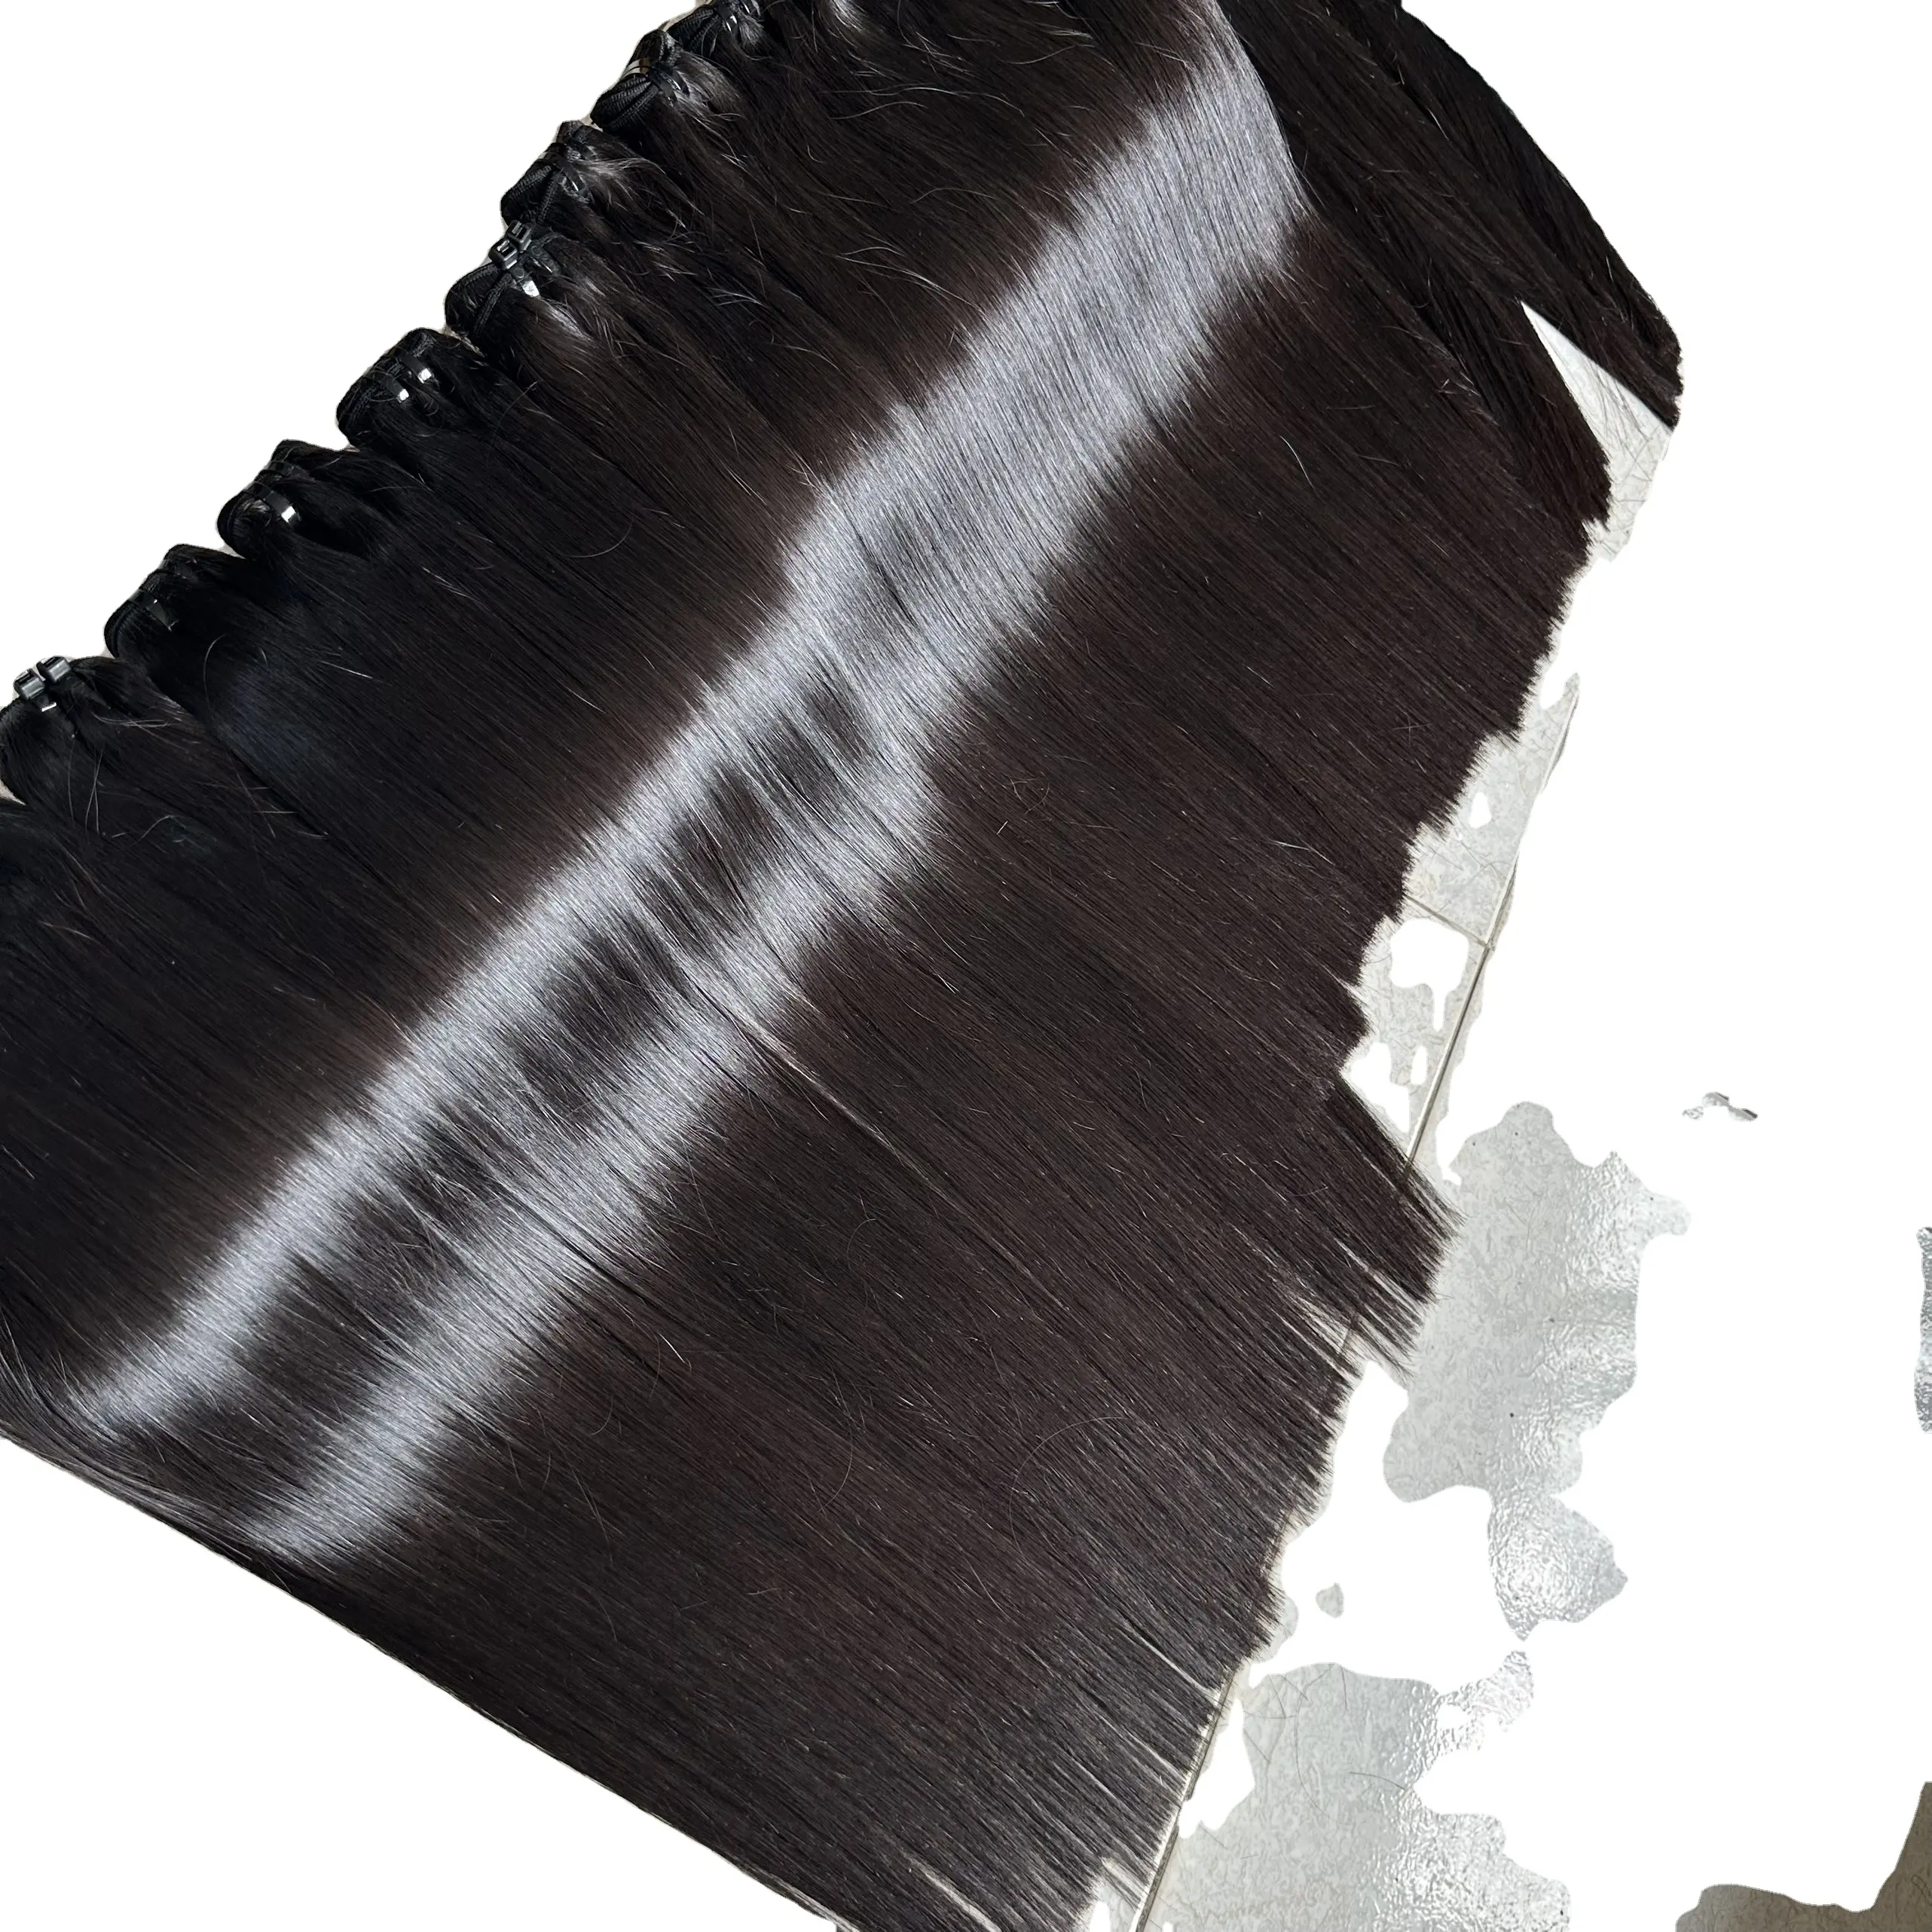 Rio factory supply hair 8''-28'' premium natural straight black virgin hair weft hair extensions